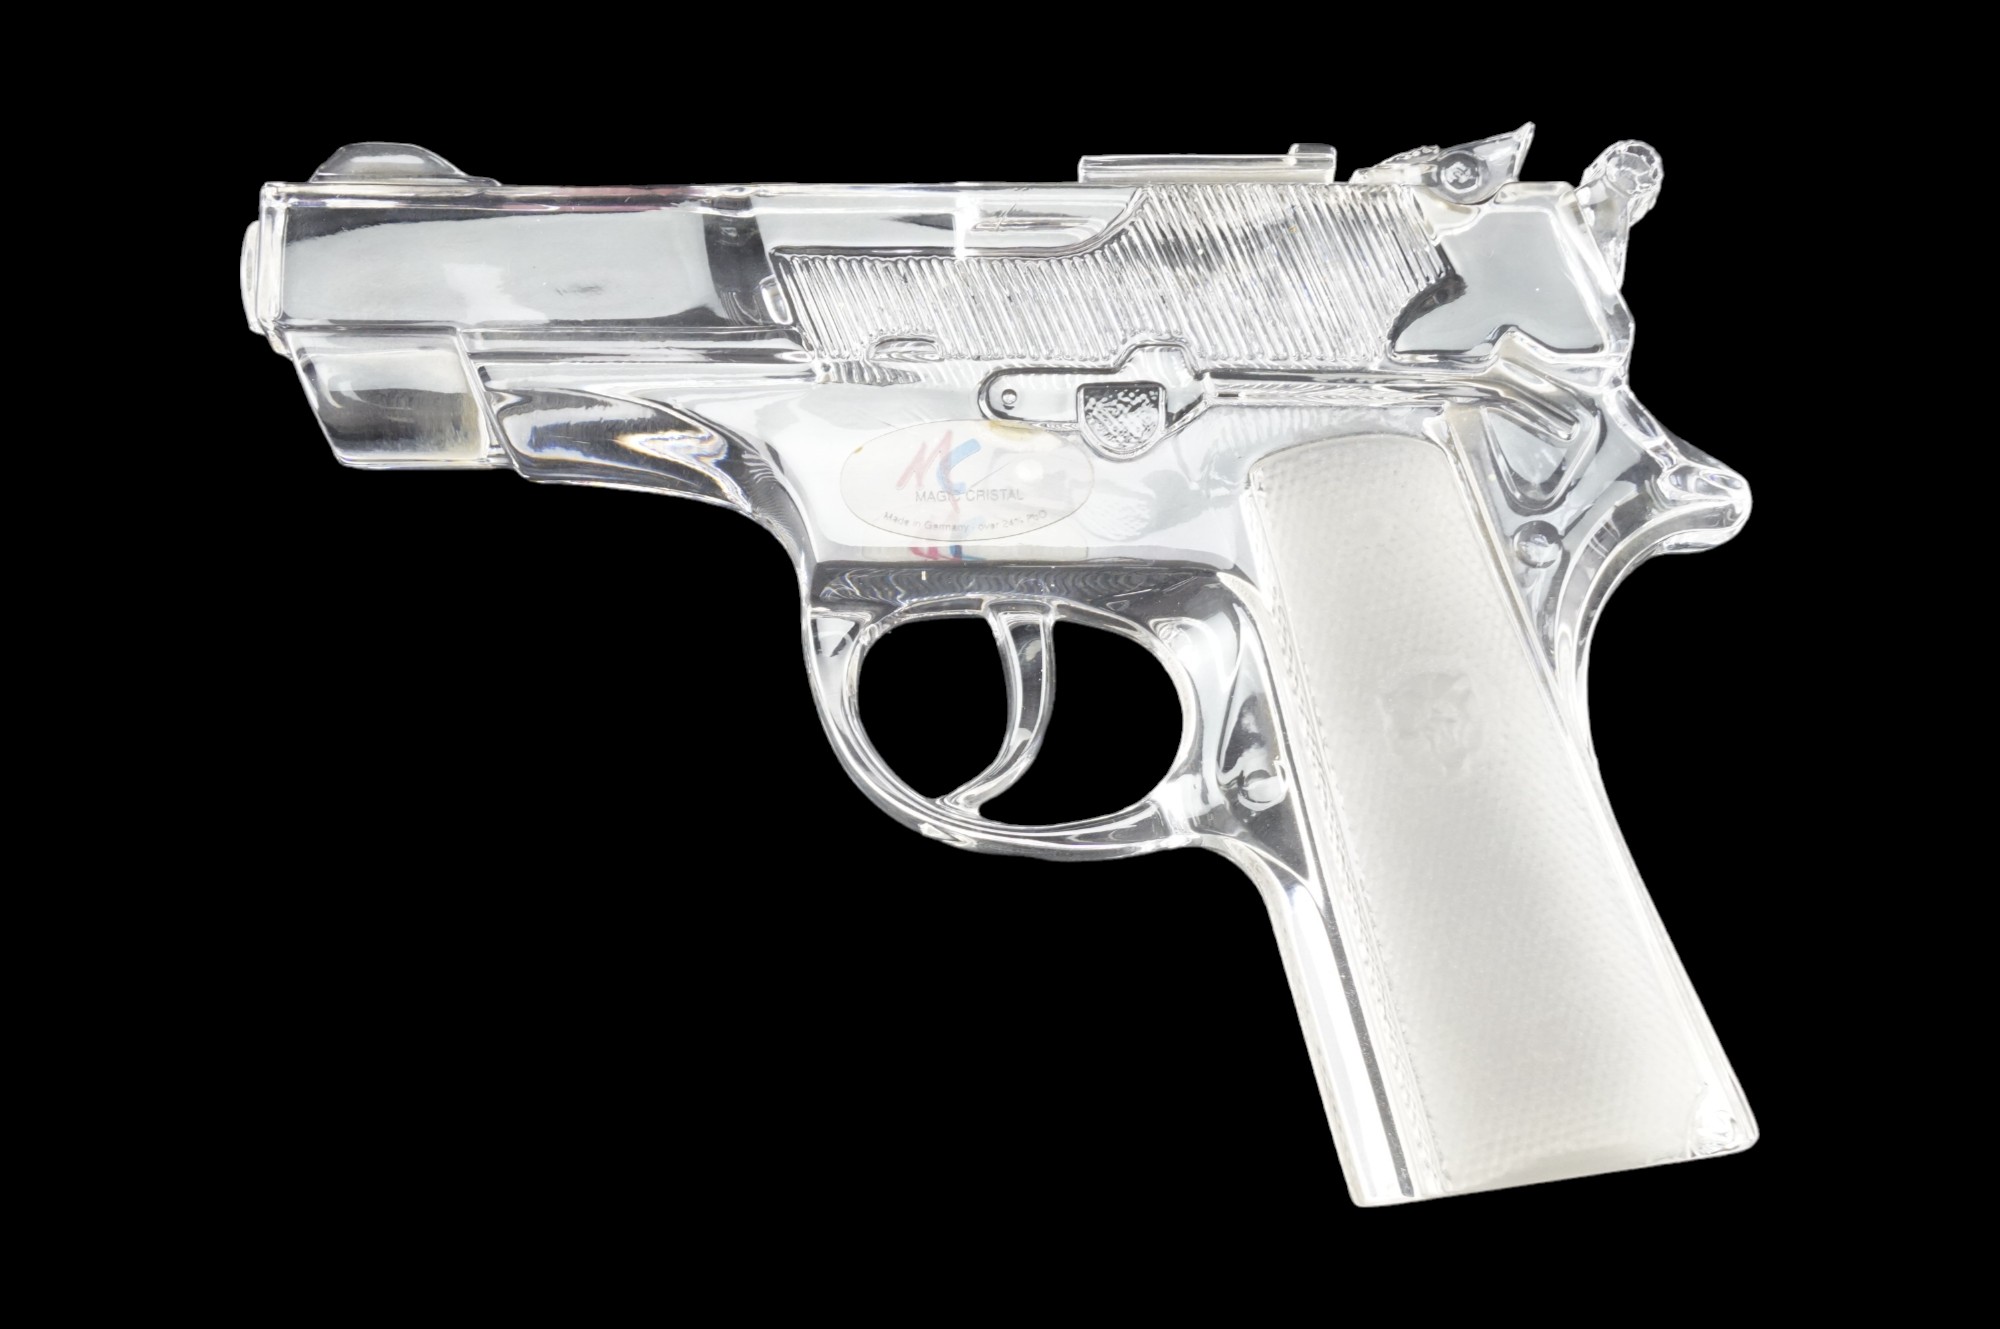 A Magic Crystal glass automatic pistol, 16.5 cm